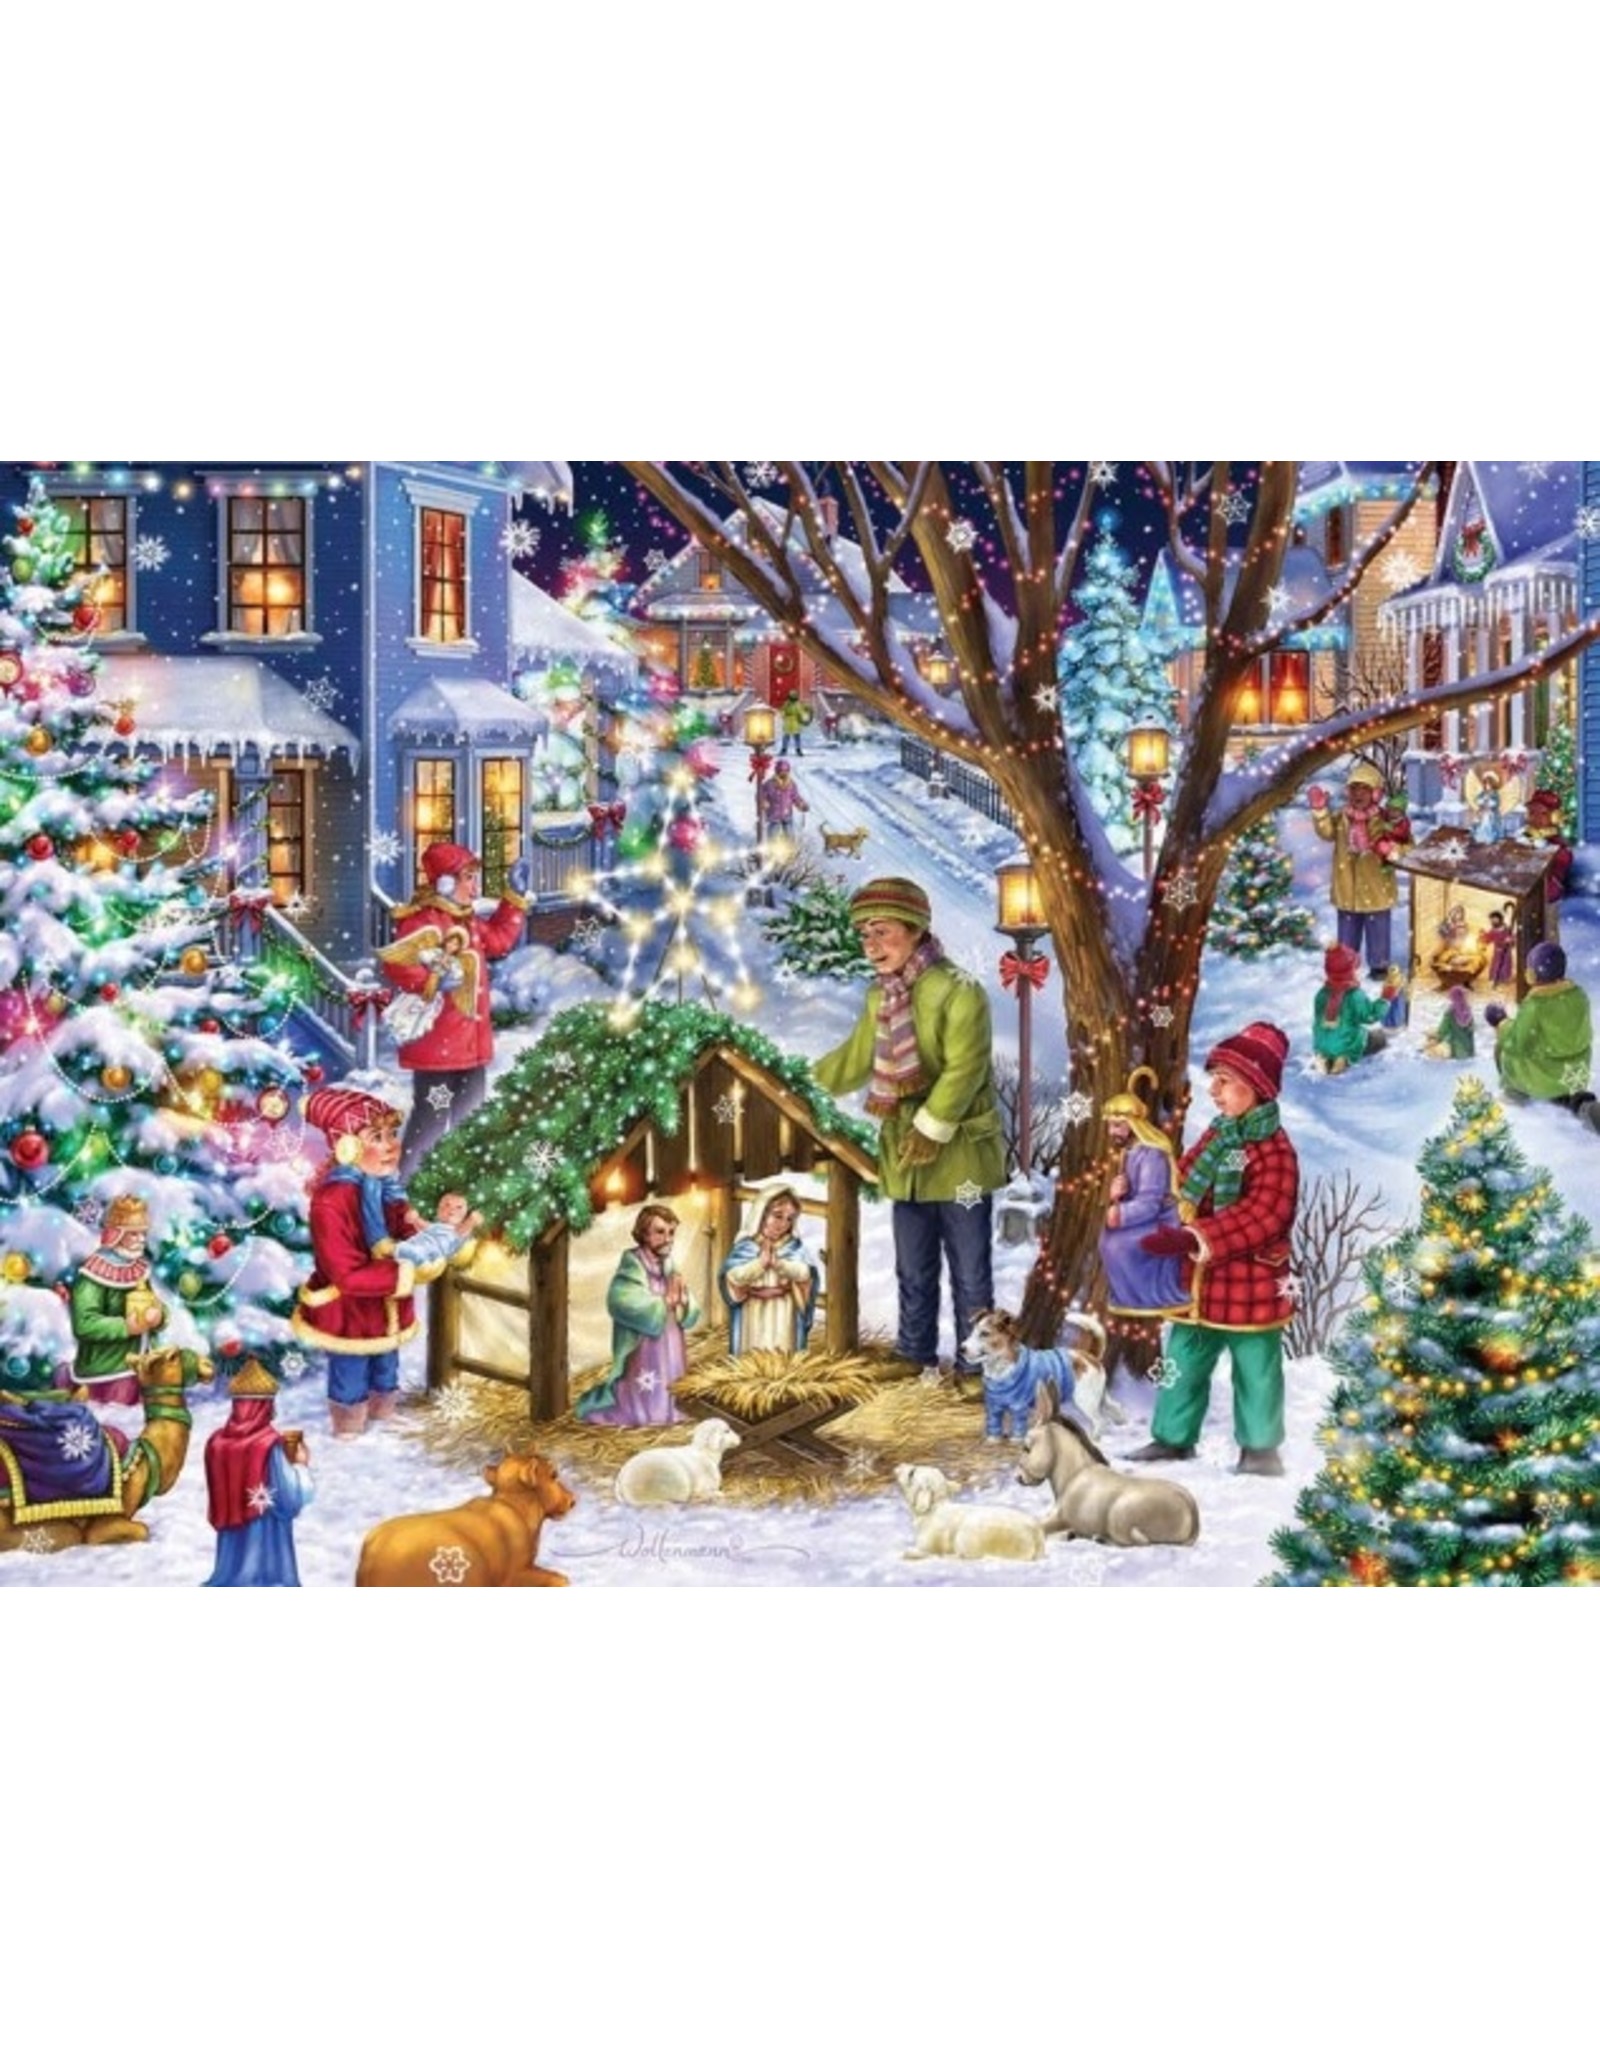 Vermont Christmas Company Advent Calendar - Neighborhood Nativity